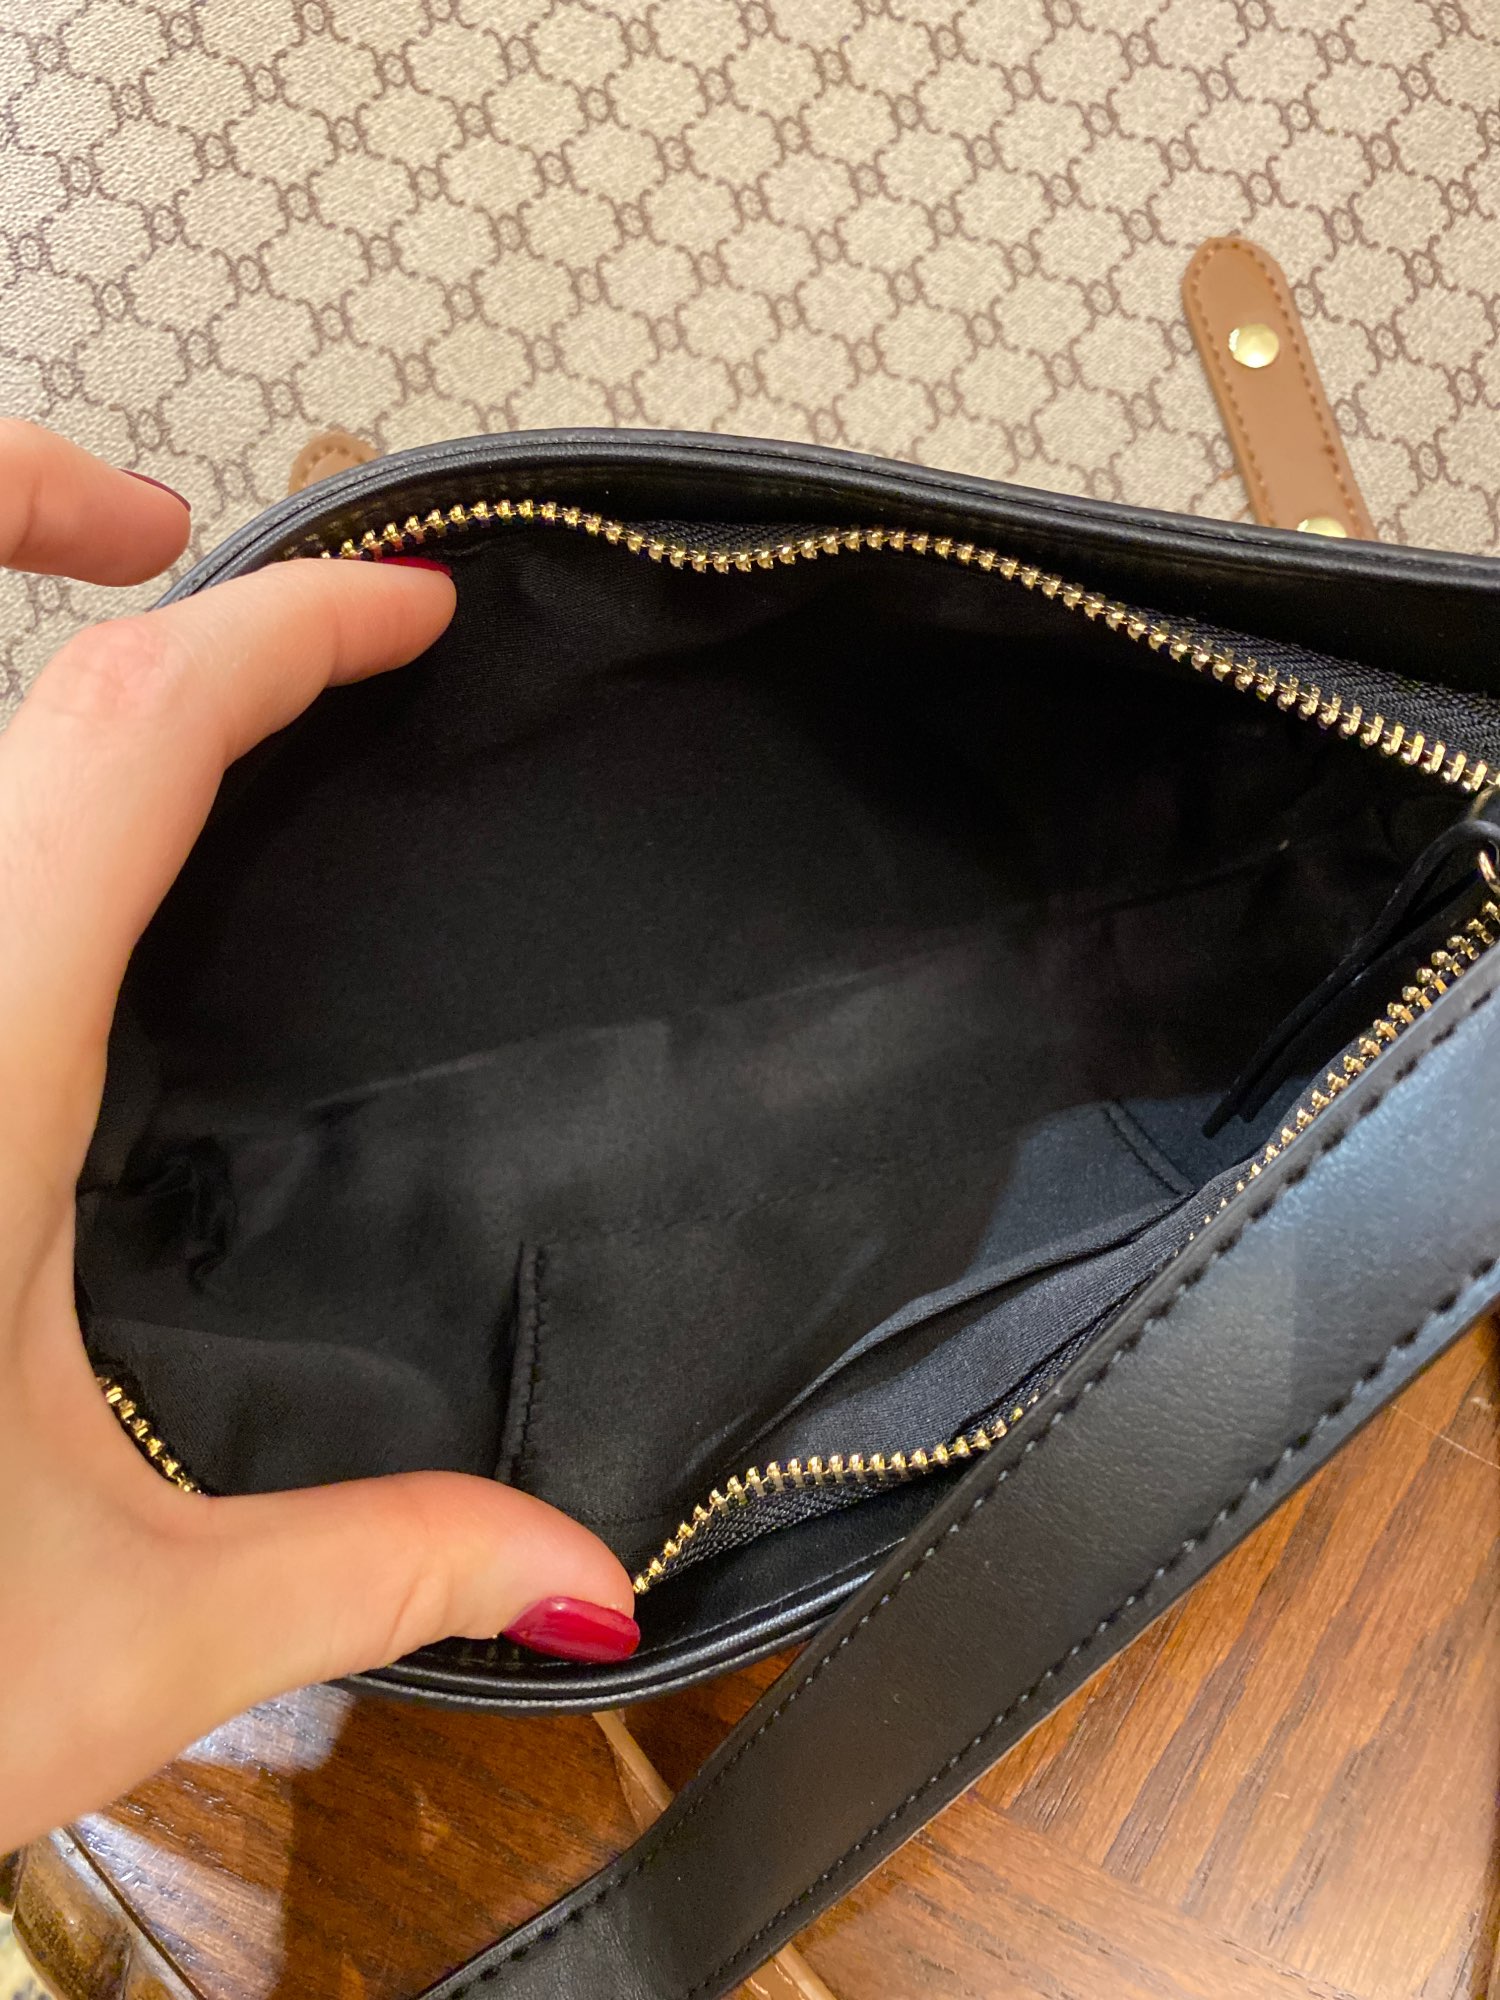 Genuine Leather Shoulder Strap Handbag Replacement Crossbody Adjustable Bag  Suitable for Gucci GG 1955 Saddle Bag Accessories - AliExpress